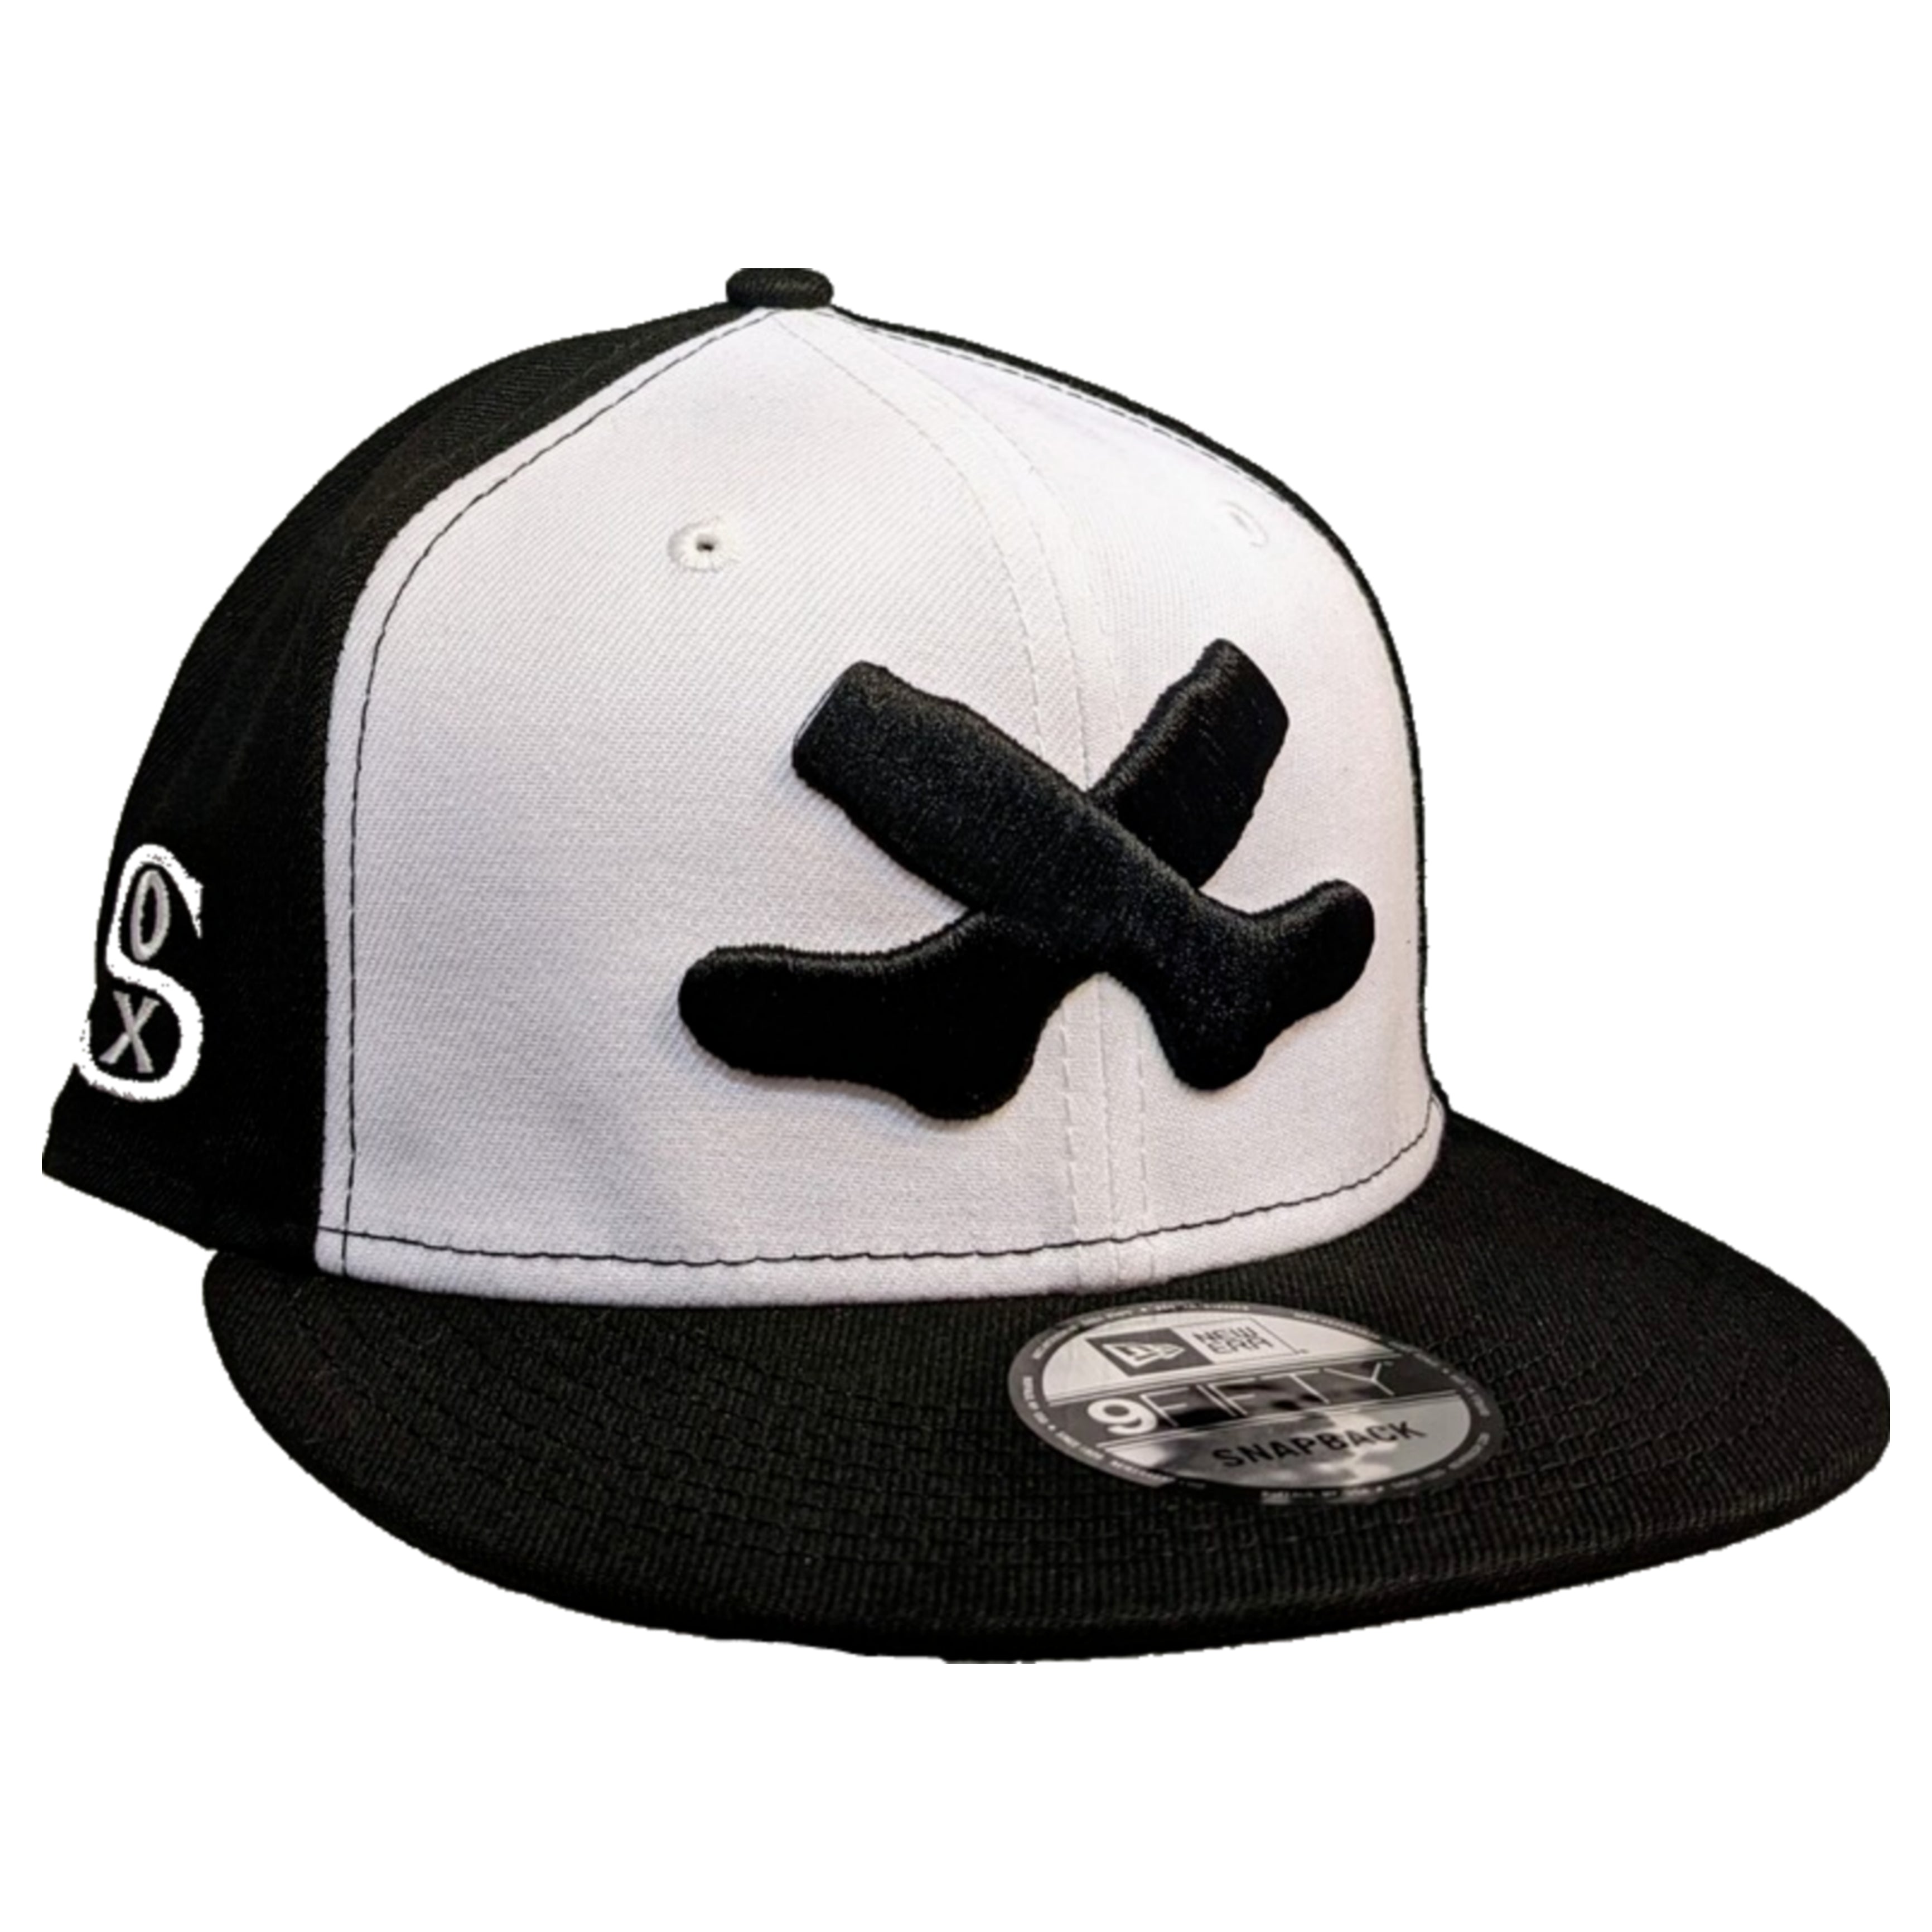 Men's New Era White/Black Baltimore Orioles On-Field Replica 9FIFTY  Snapback Hat